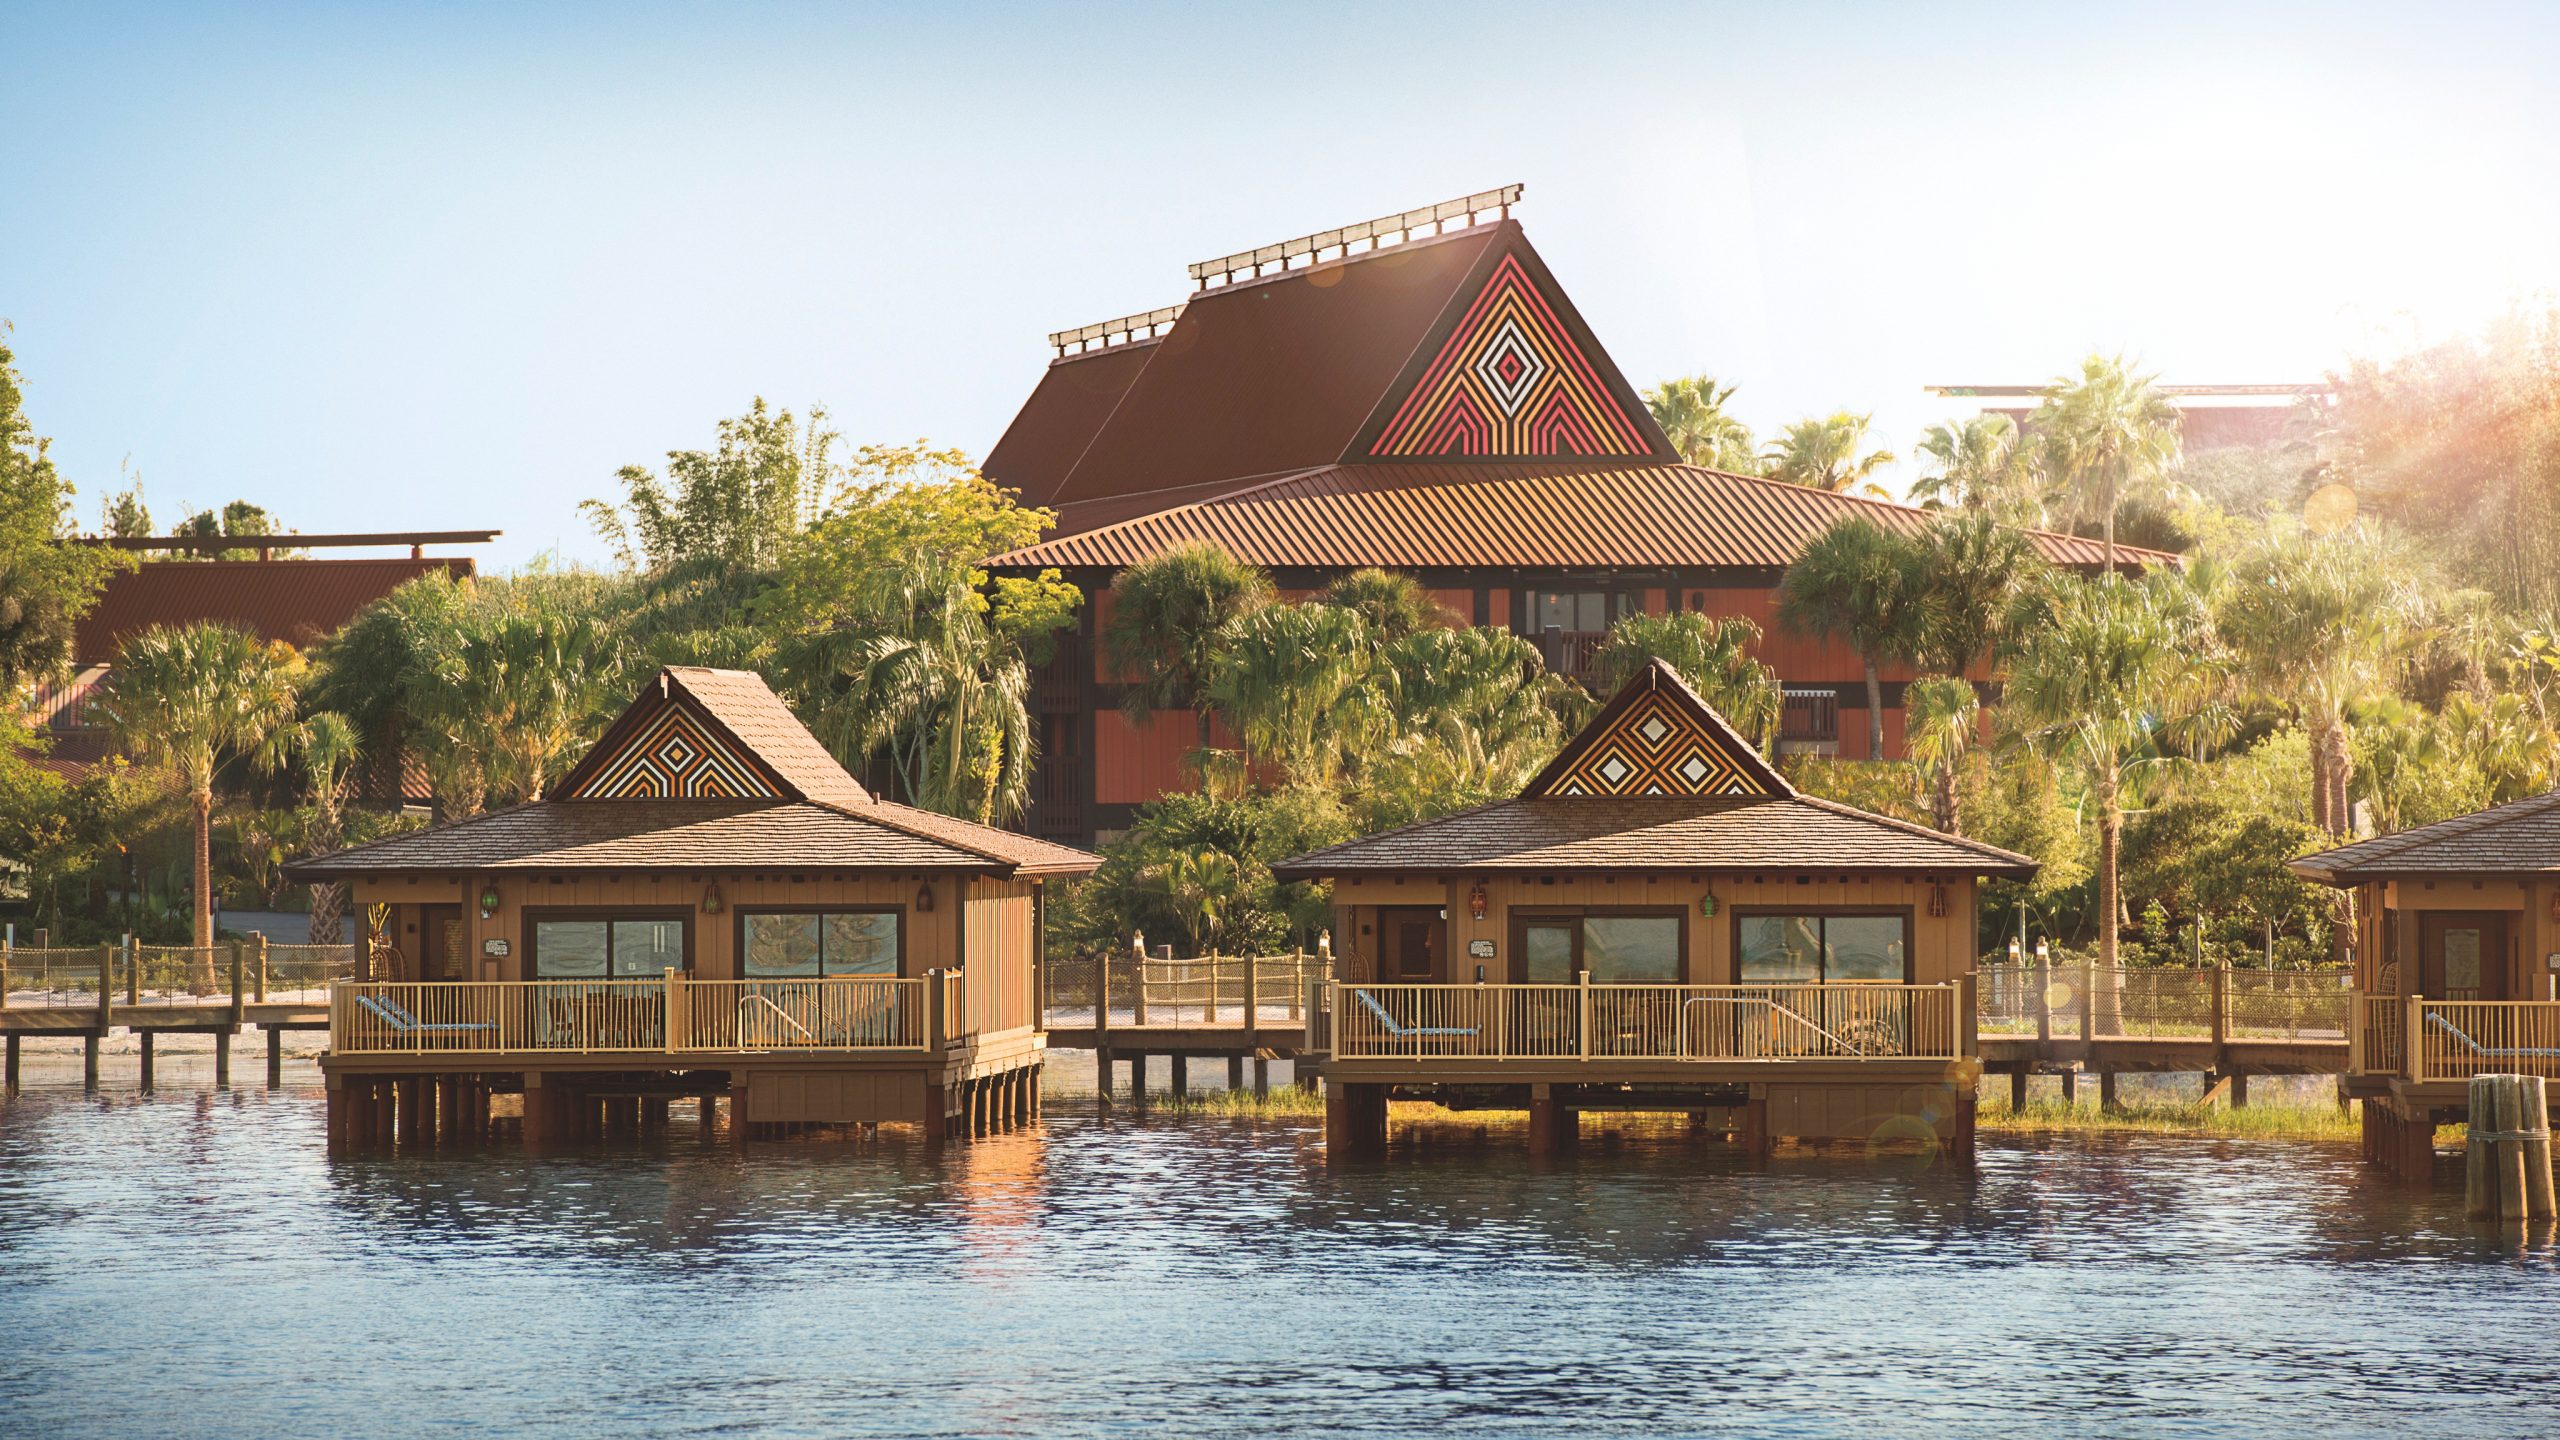 Disney's Polynesian Villas & Bungalows - Disney Vacation Club (DVC)